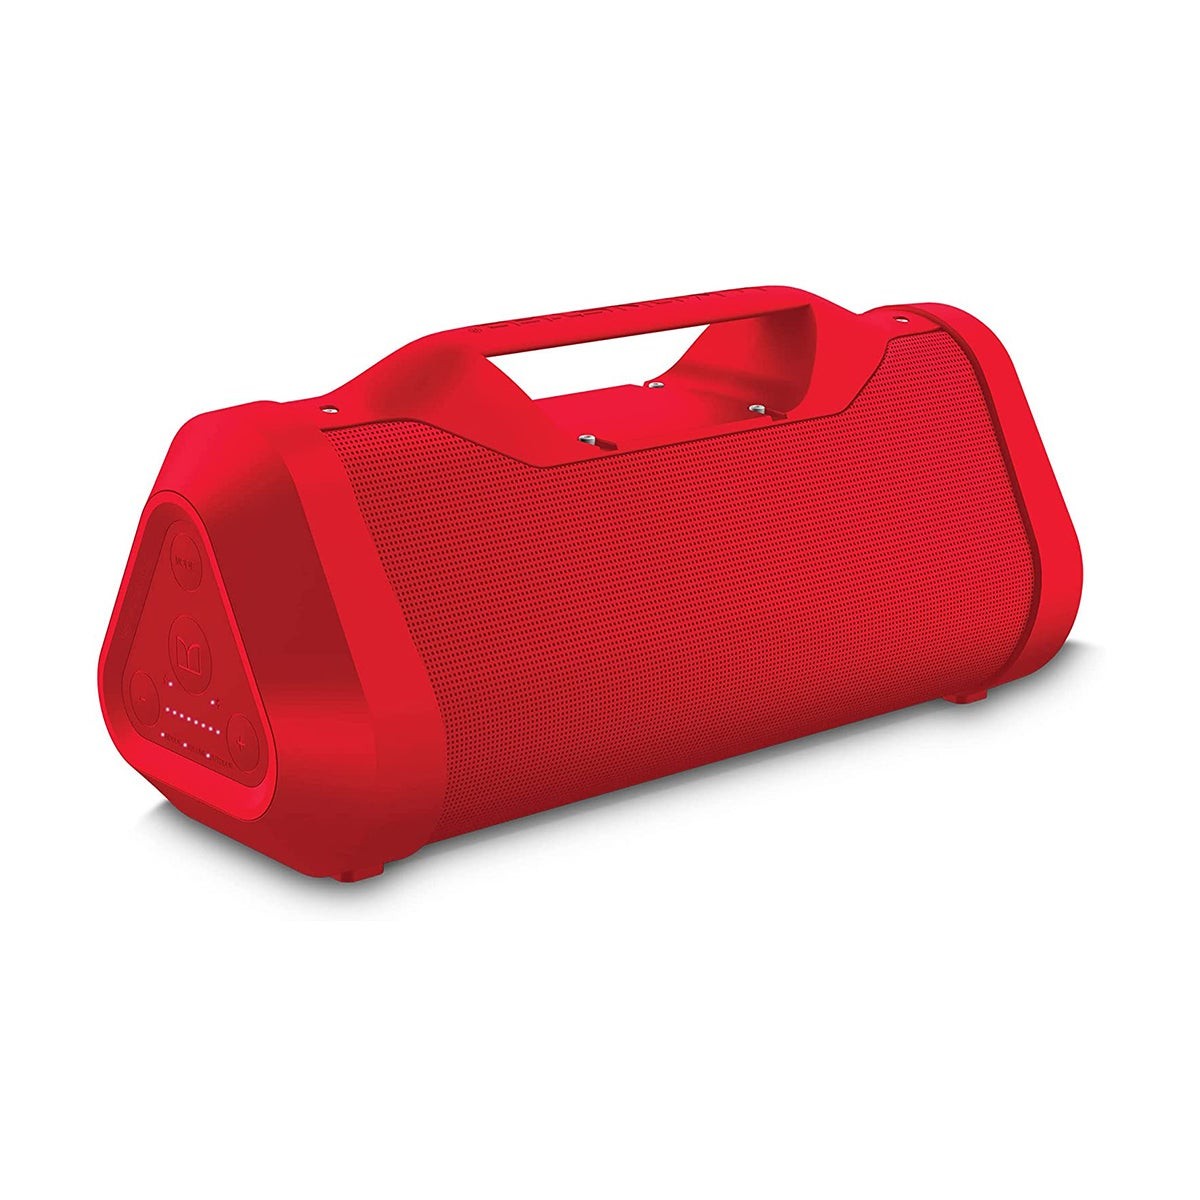 Blaster 3.0 Portable Wireless Boombox Speaker Red